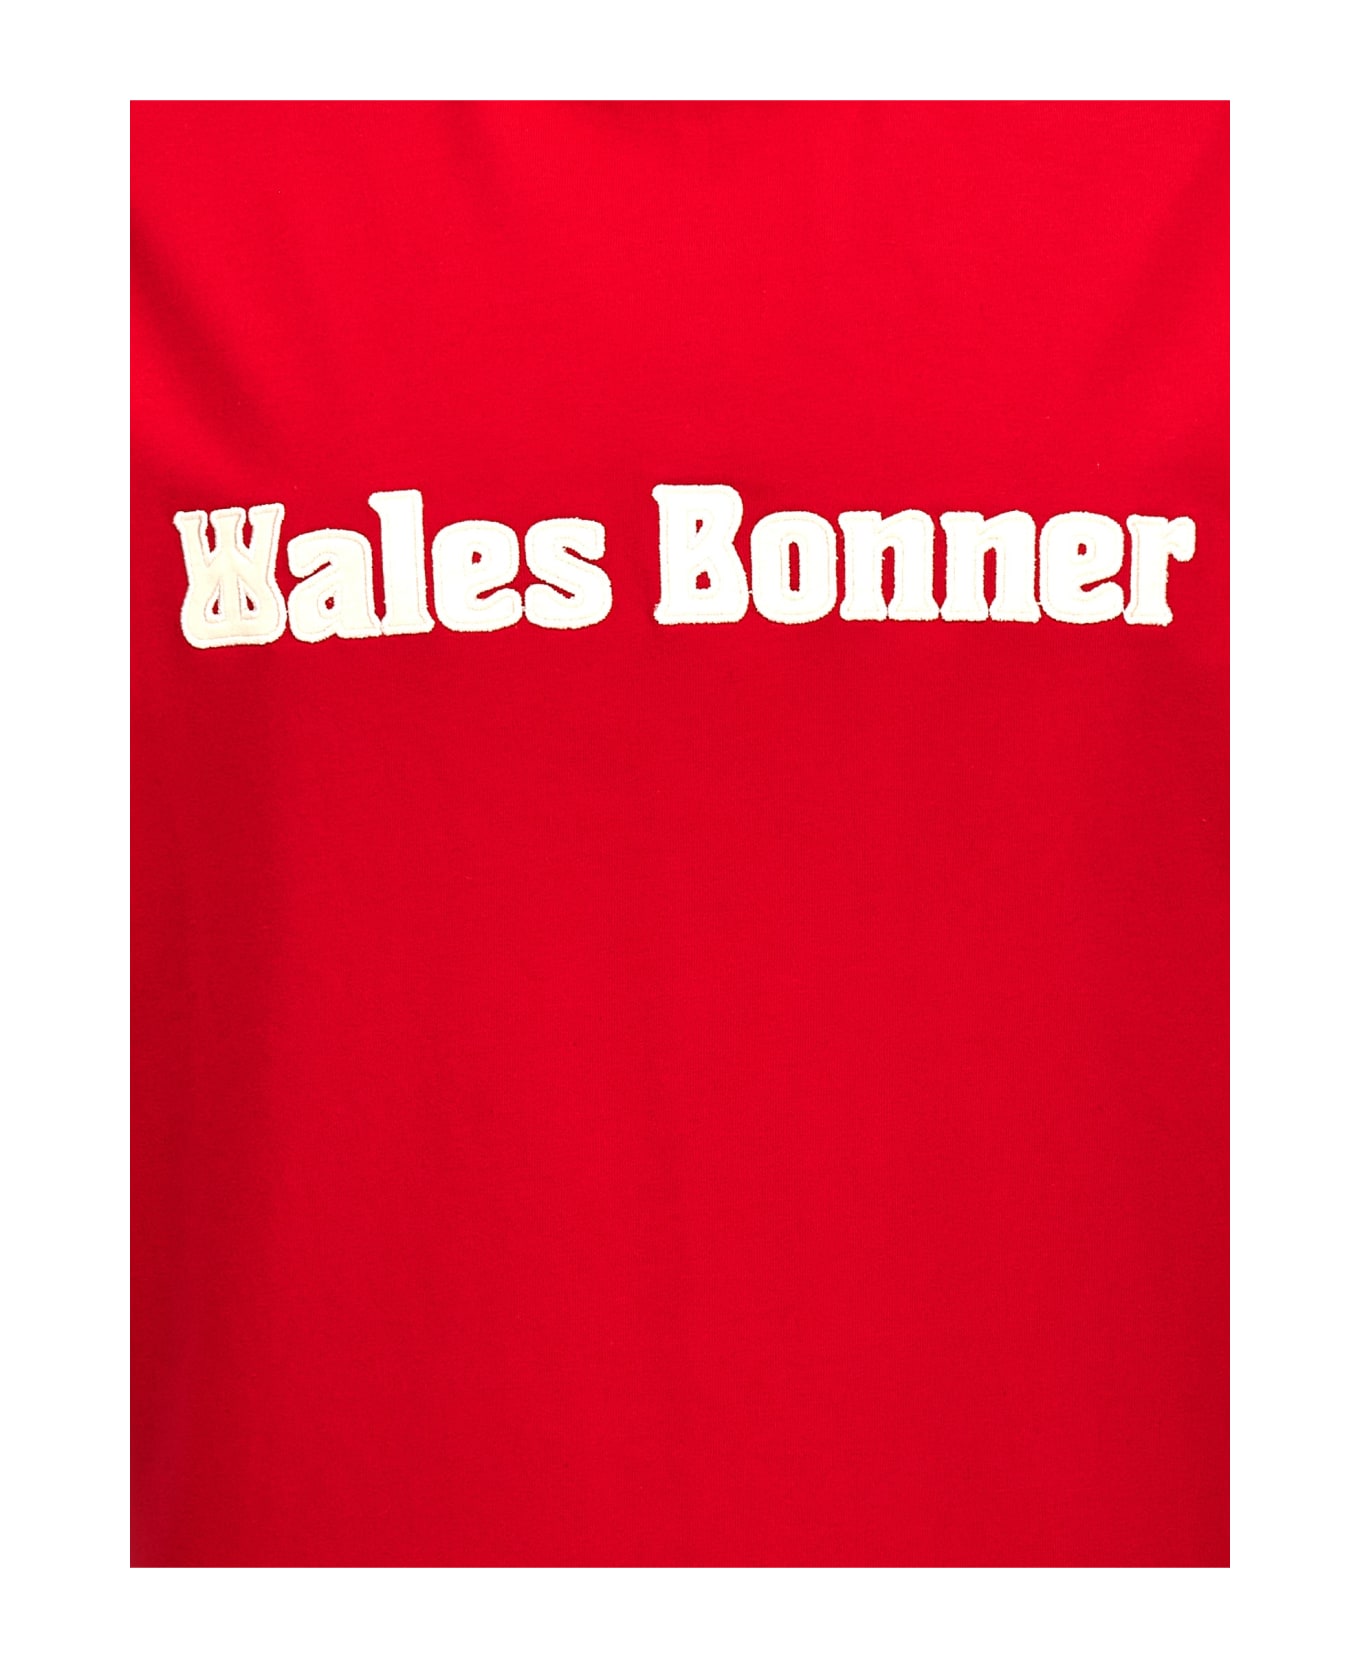 Wales Bonner 'original' T-shirt - Red